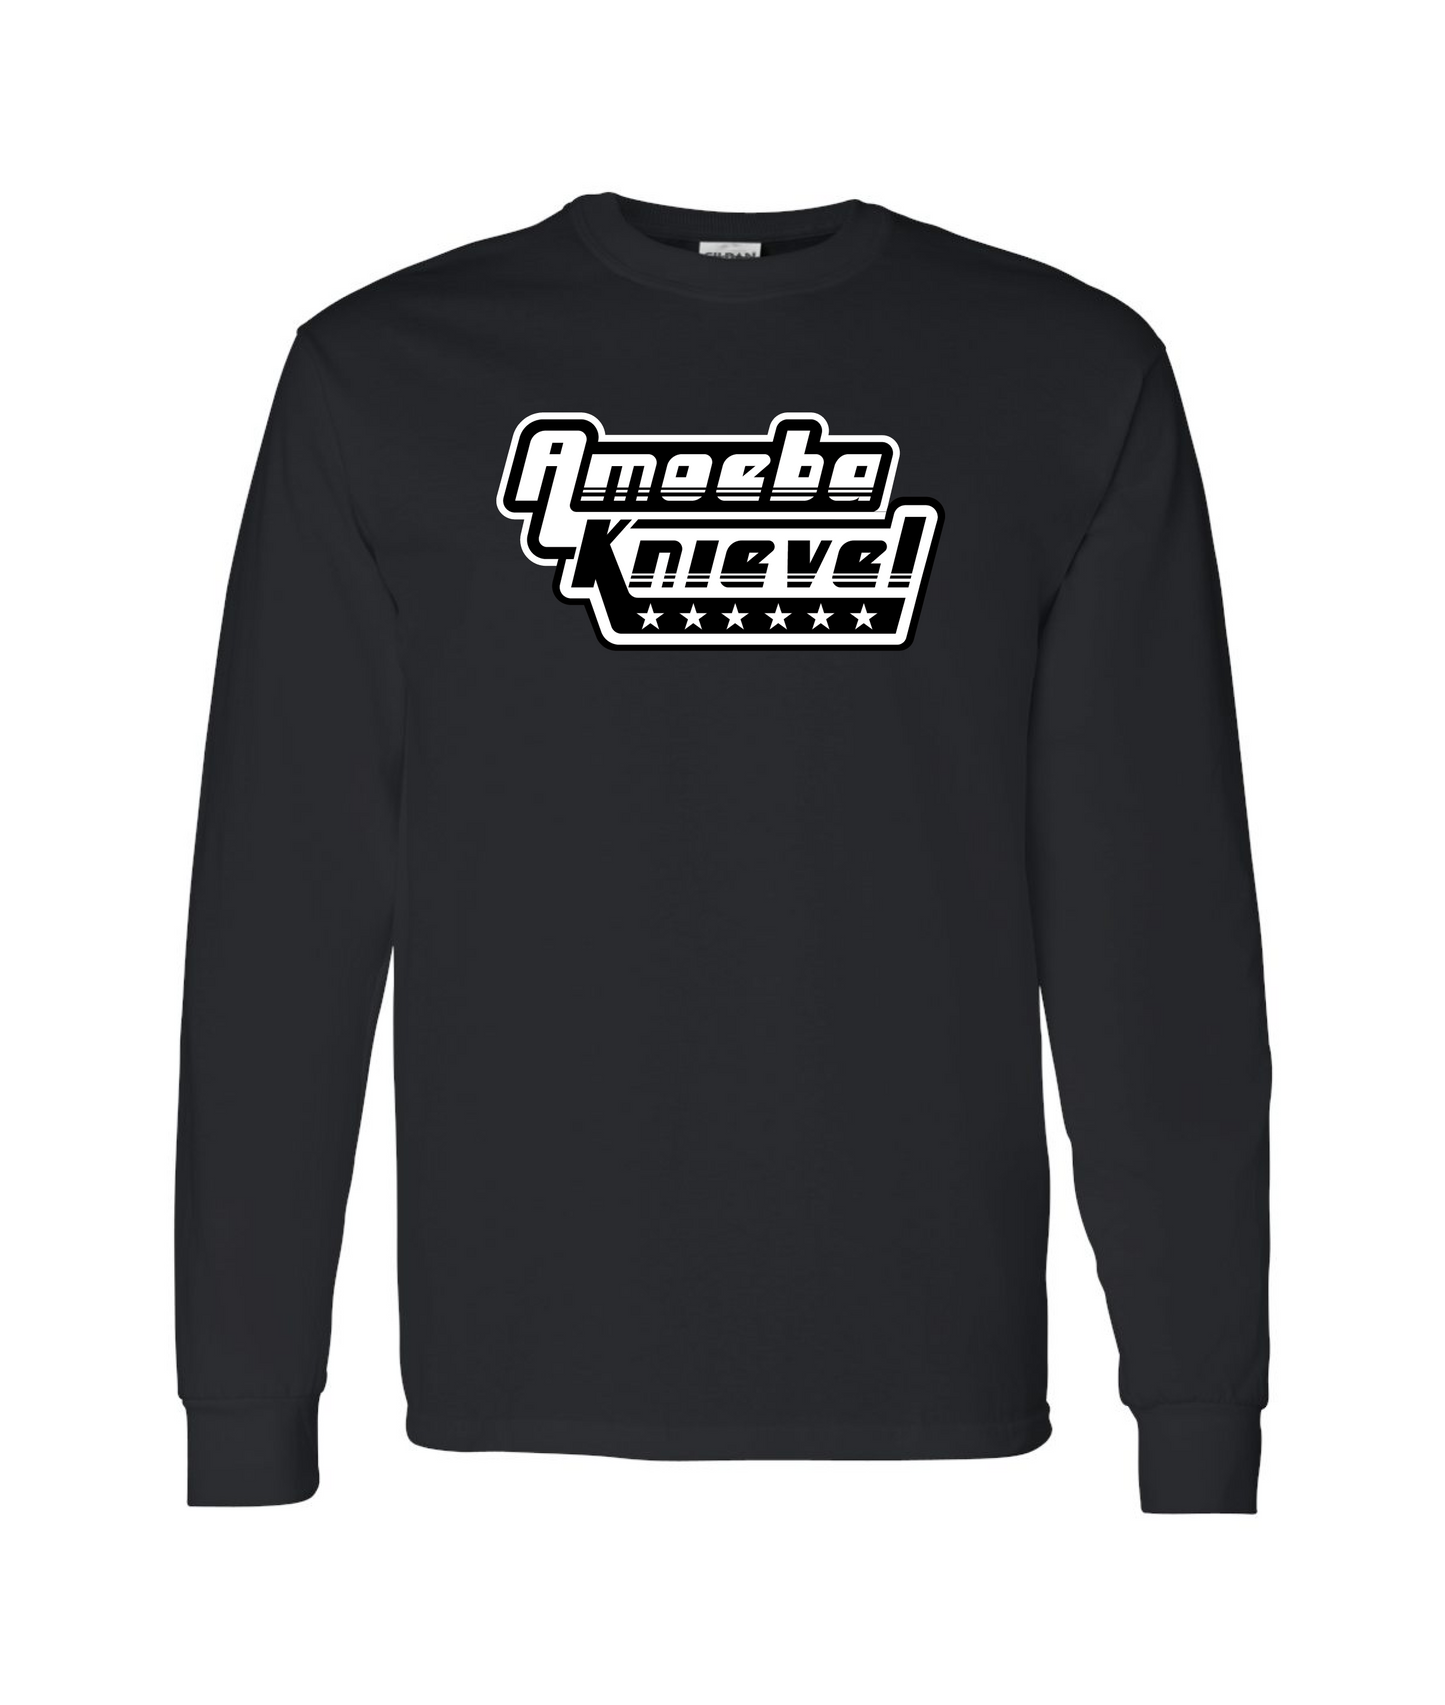 Amoeba Knievel Merch 'N Stuff - Logo - Black Long Sleeve T